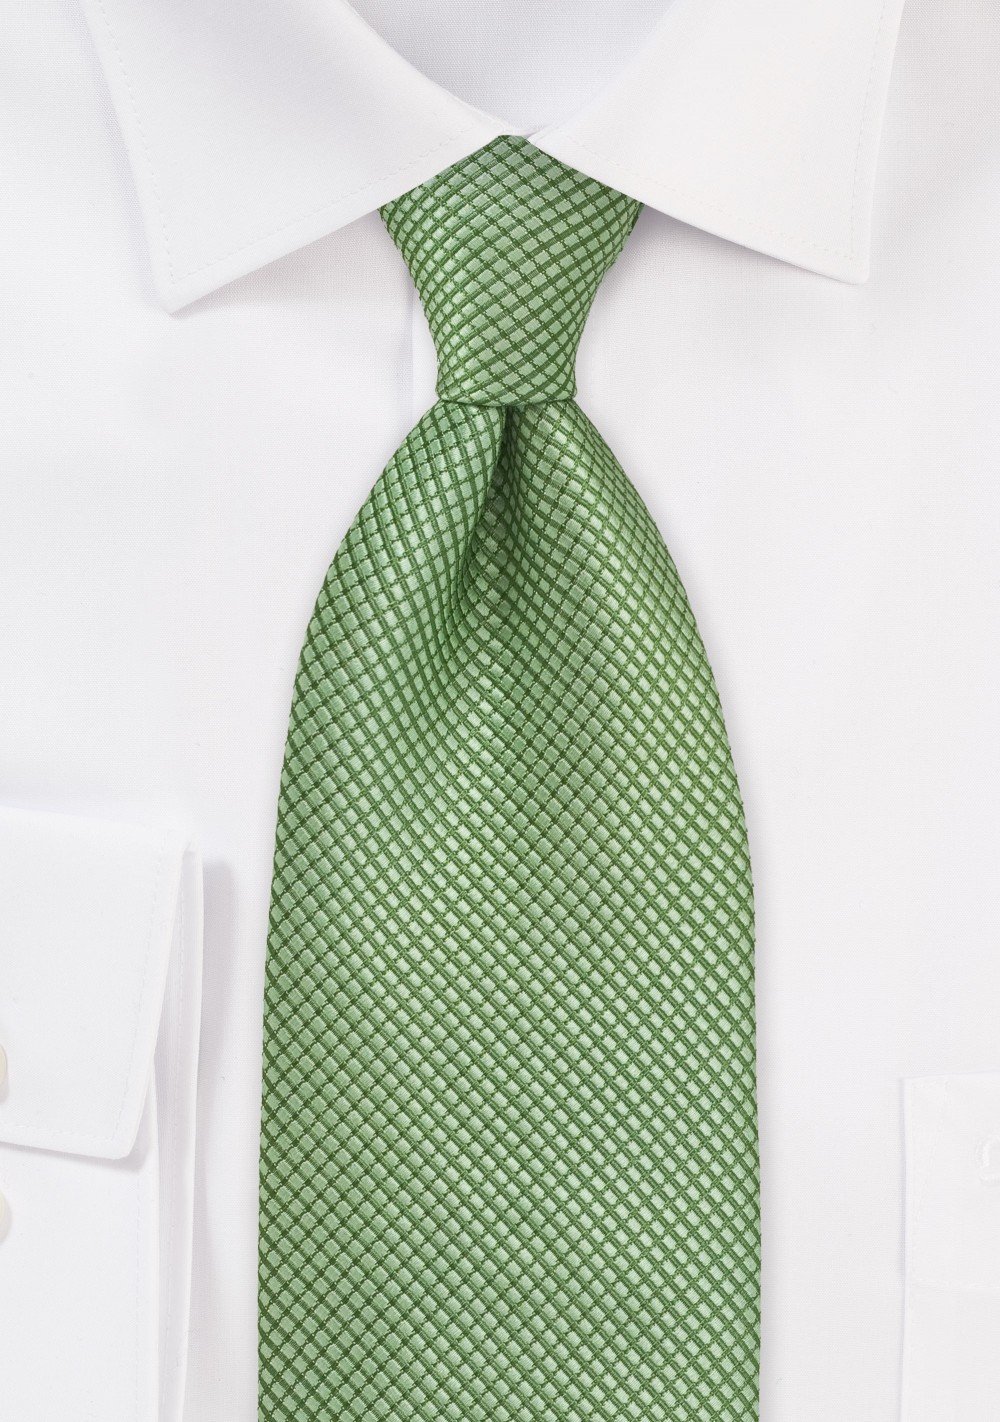 Kids Textured Green Tie